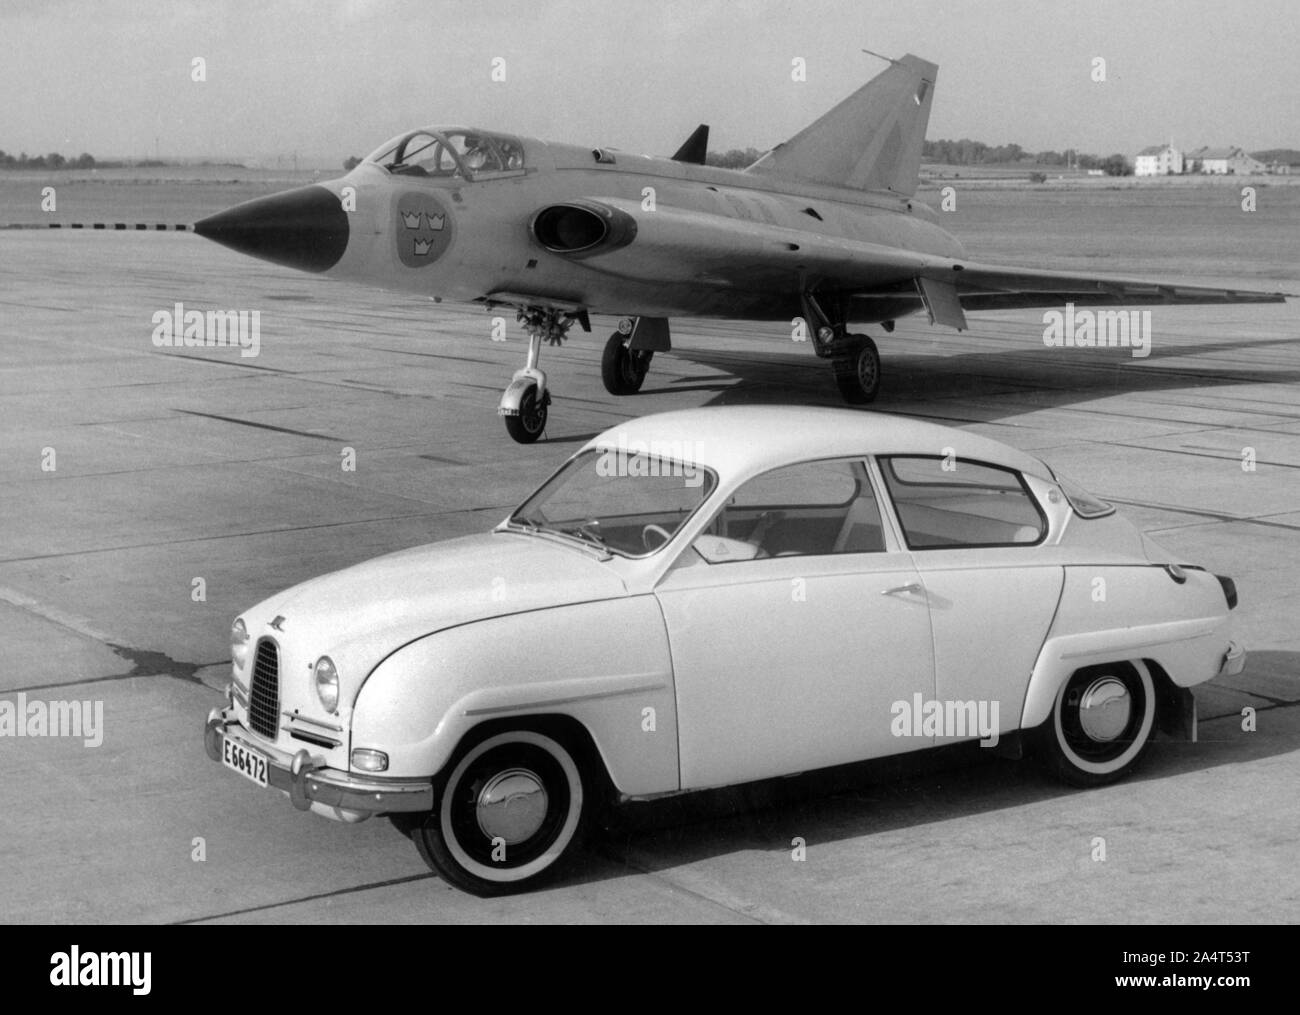 1960 Saab 96 und Saab 35 Draken Jet Fighter Stockfotografie - Alamy